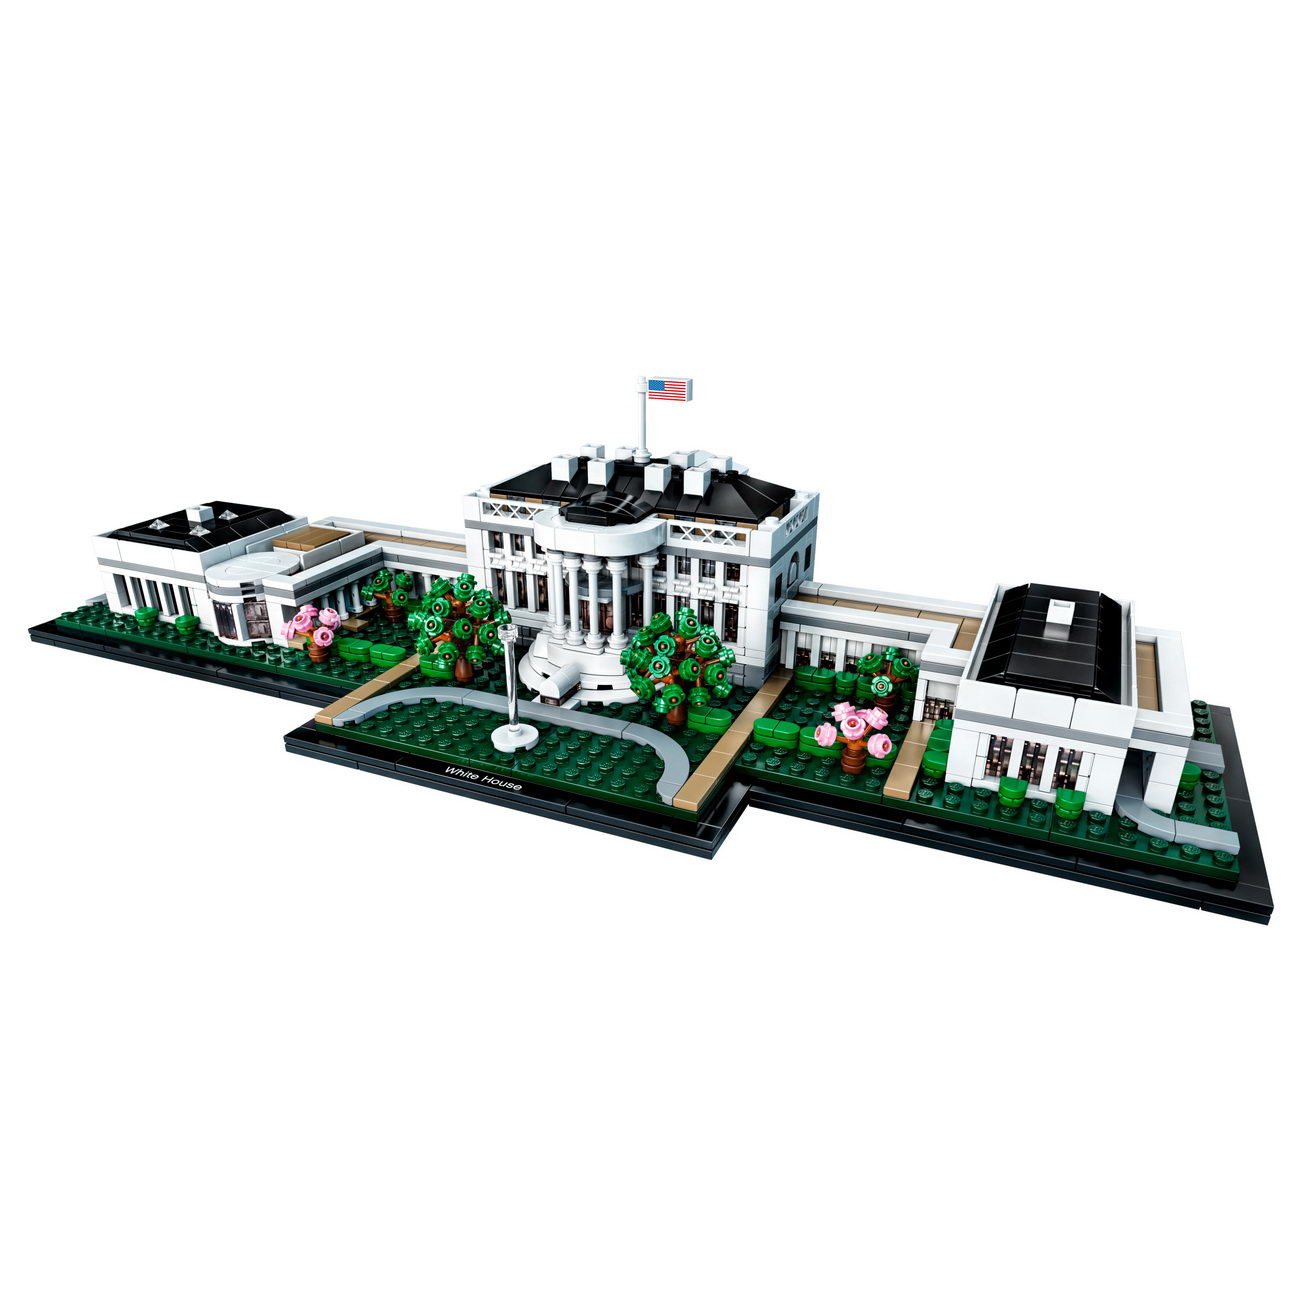 LEGO Architecture 21054 - White House